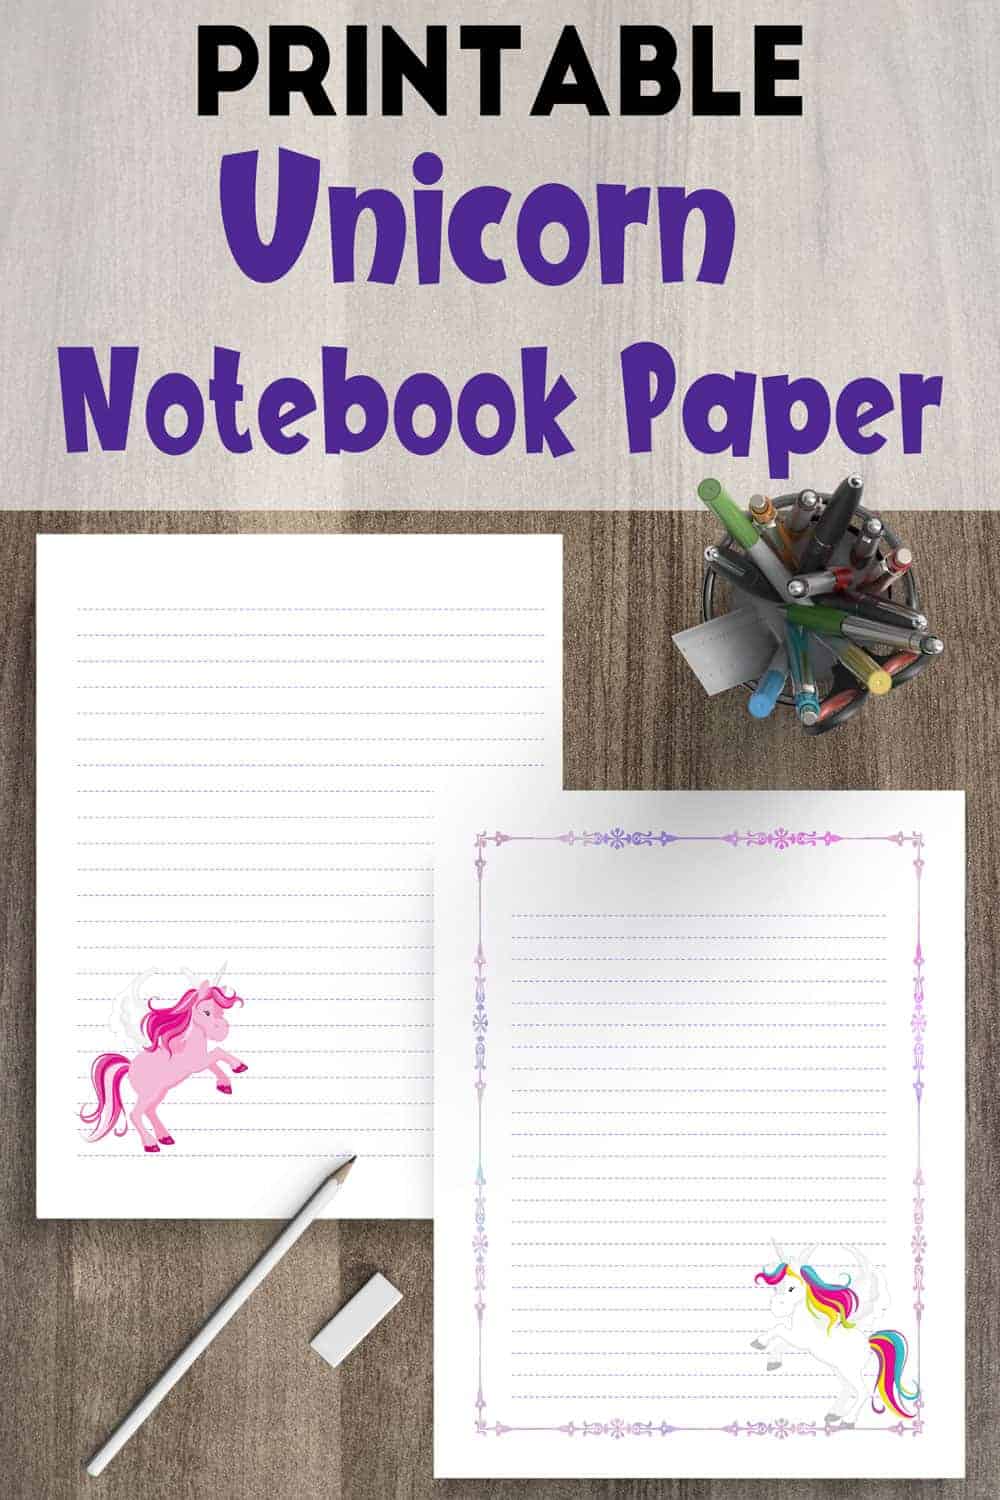 Free Printable Unicorn Notebook Paper The Artisan Life